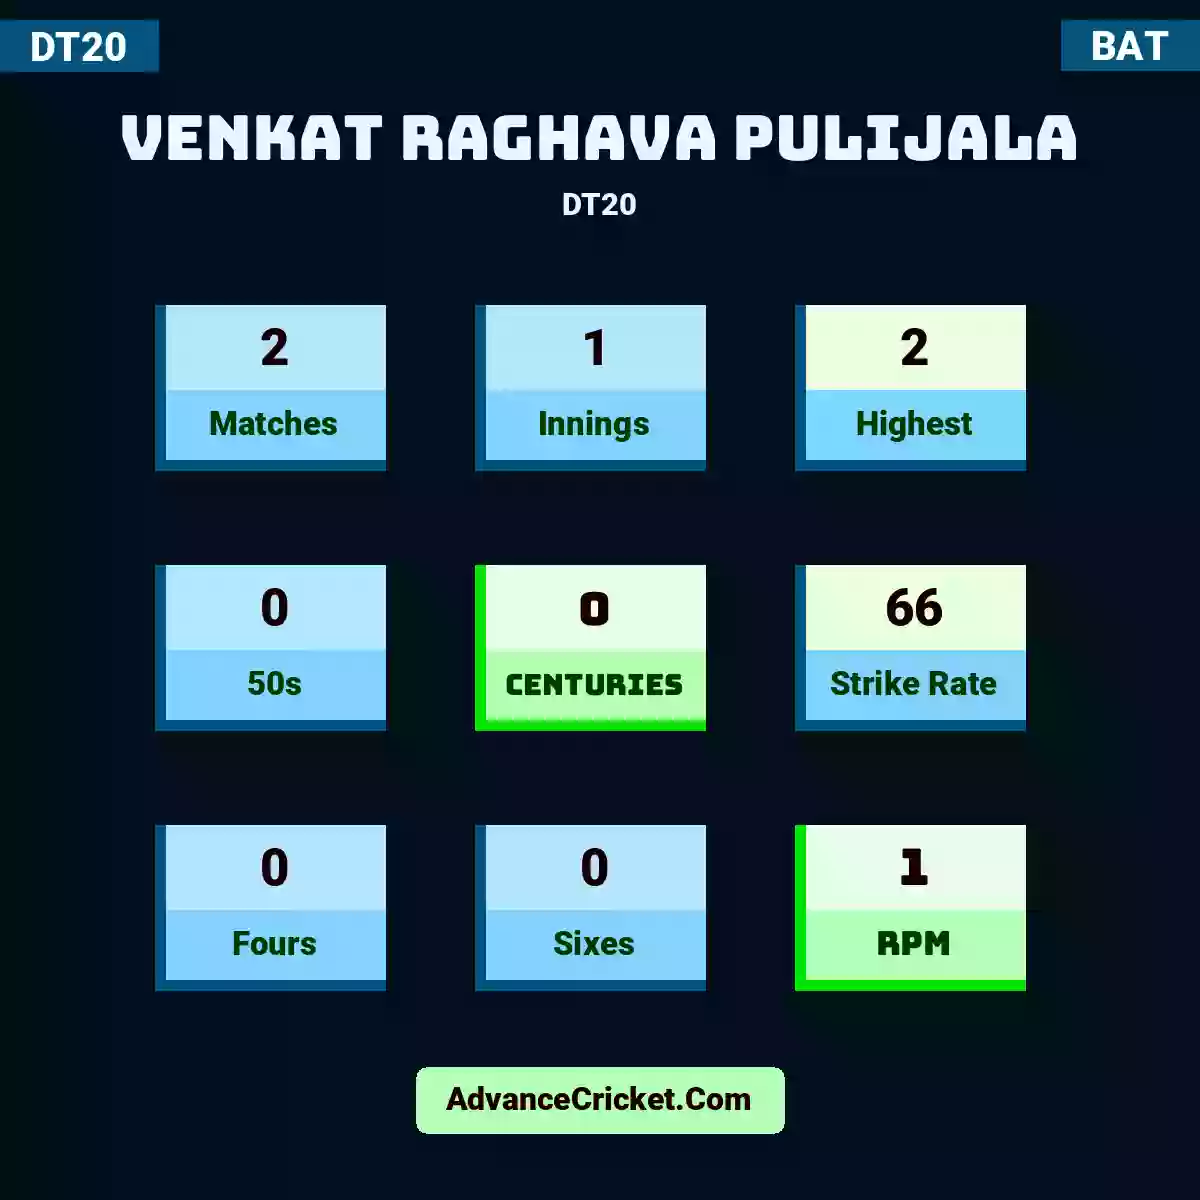 Venkat Raghava Pulijala DT20 , Venkat Raghava Pulijala played 2 matches, scored 2 runs as highest, 0 half-centuries, and 0 centuries, with a strike rate of 66. V.Raghava.Pulijala hit 0 fours and 0 sixes, with an RPM of 1.